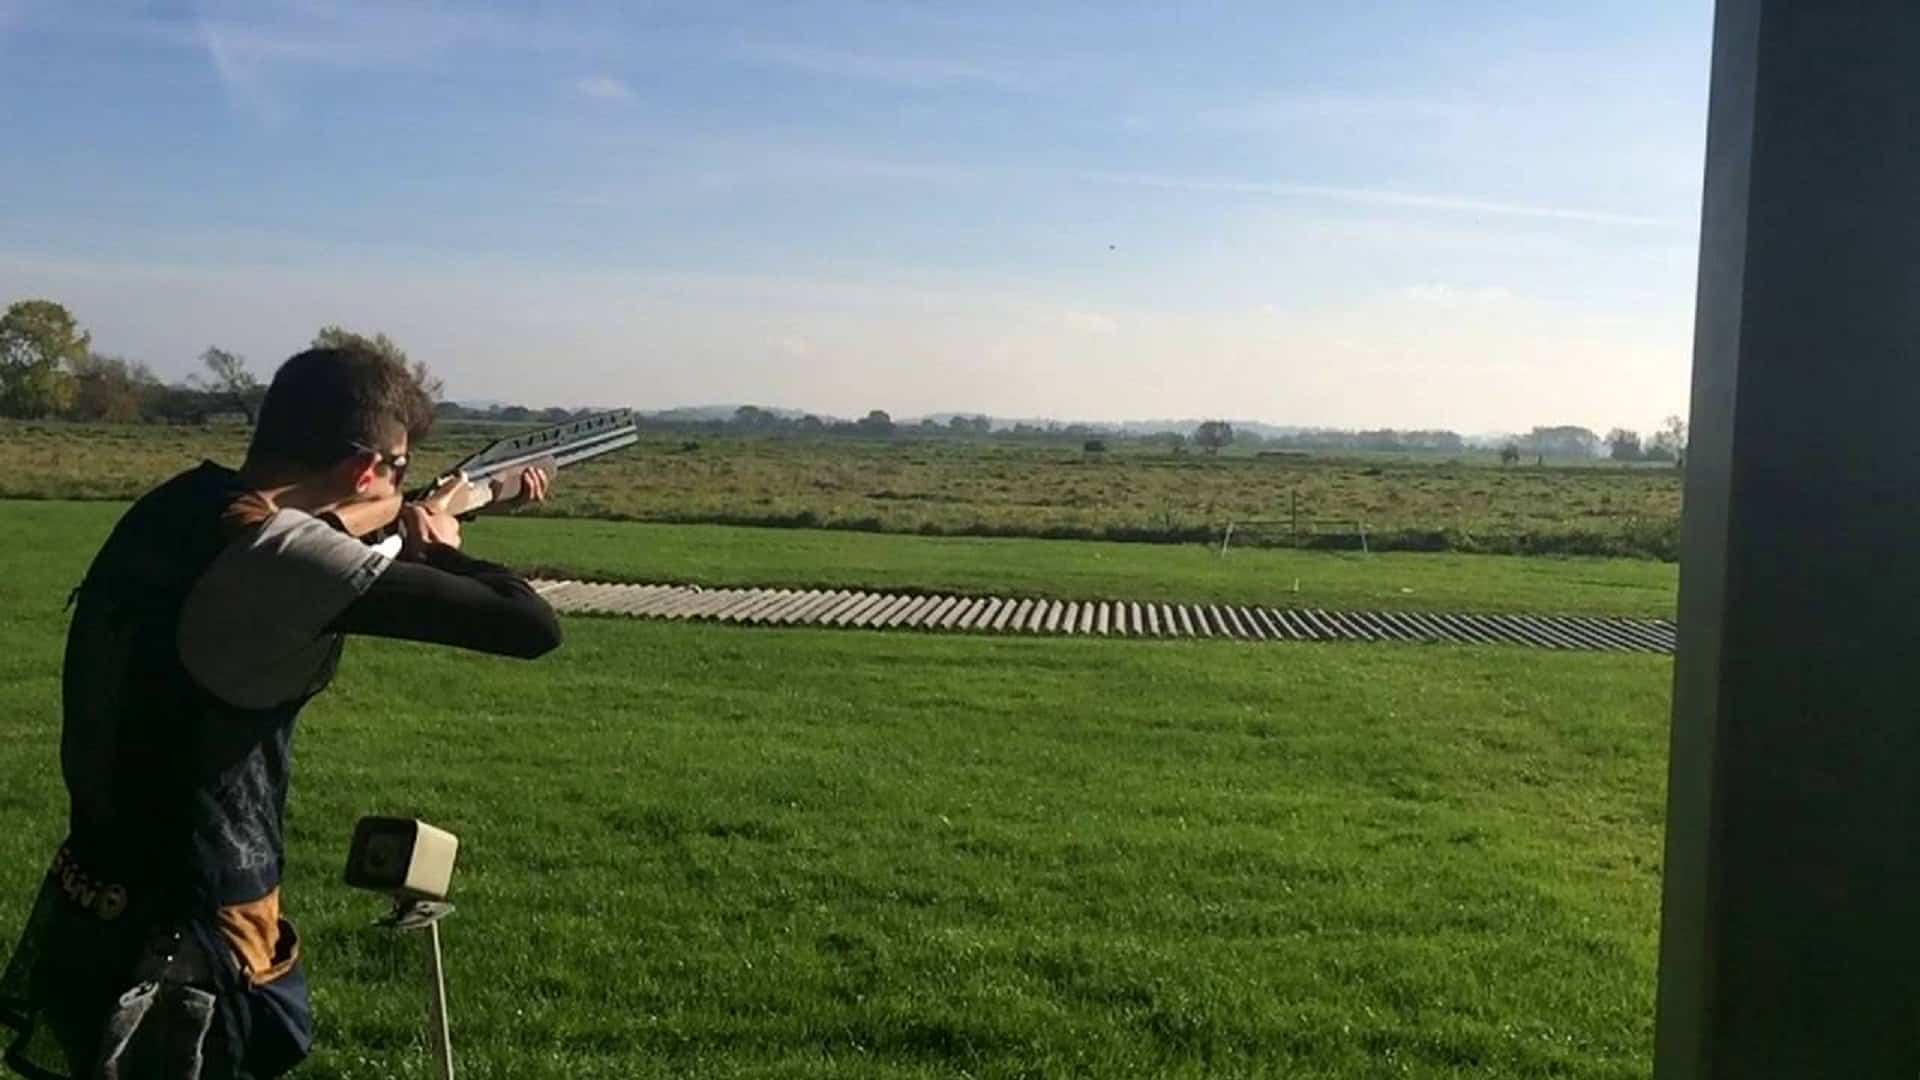 Brook Bank Shooting Ground in UK